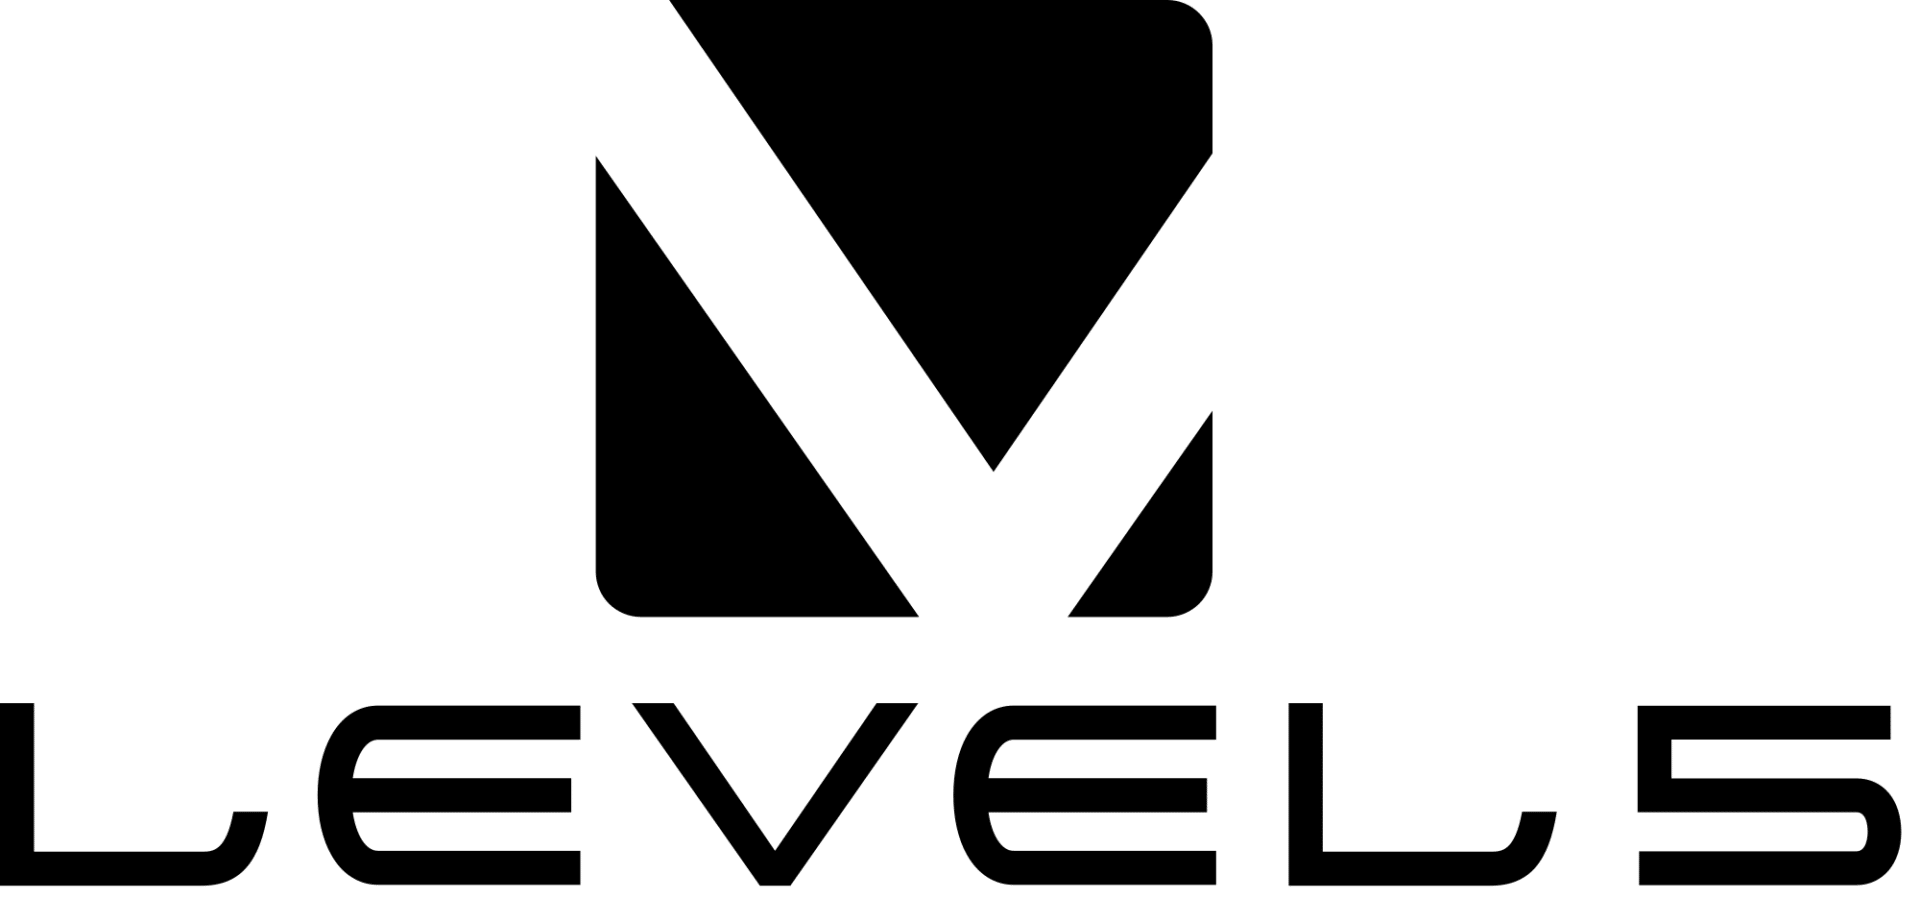 Level 5 to focus 2018 on Nintendo Switch